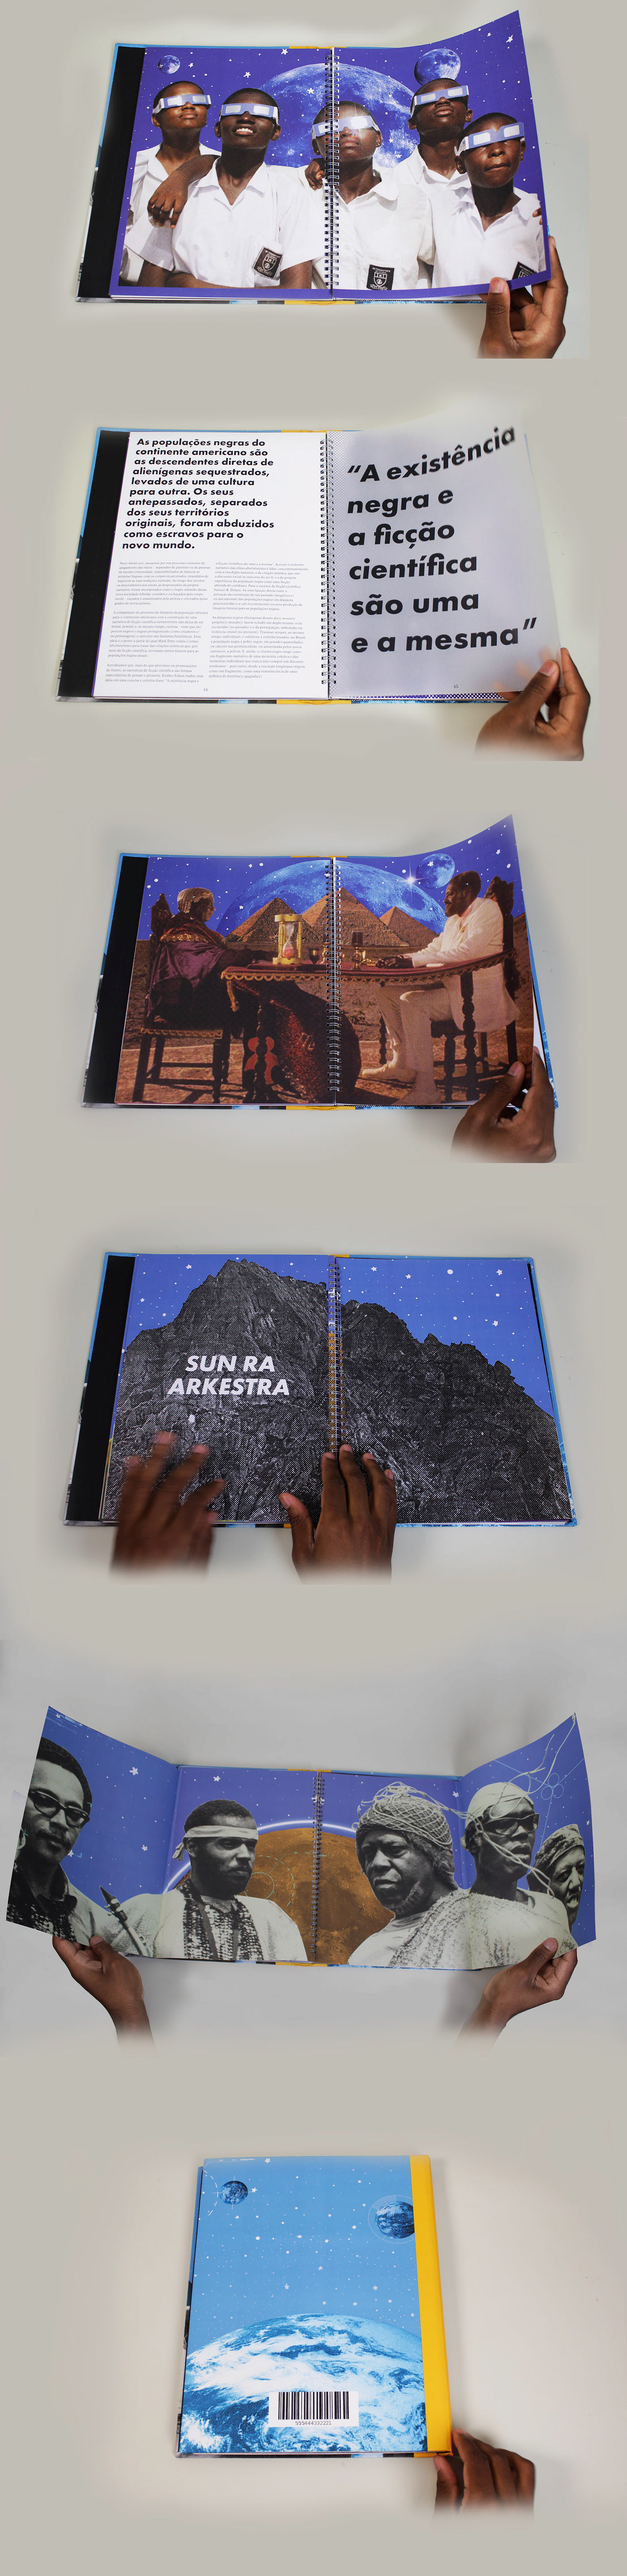 TCC afrofuturismo afrofuturism afro book Livro negro design cultura arte